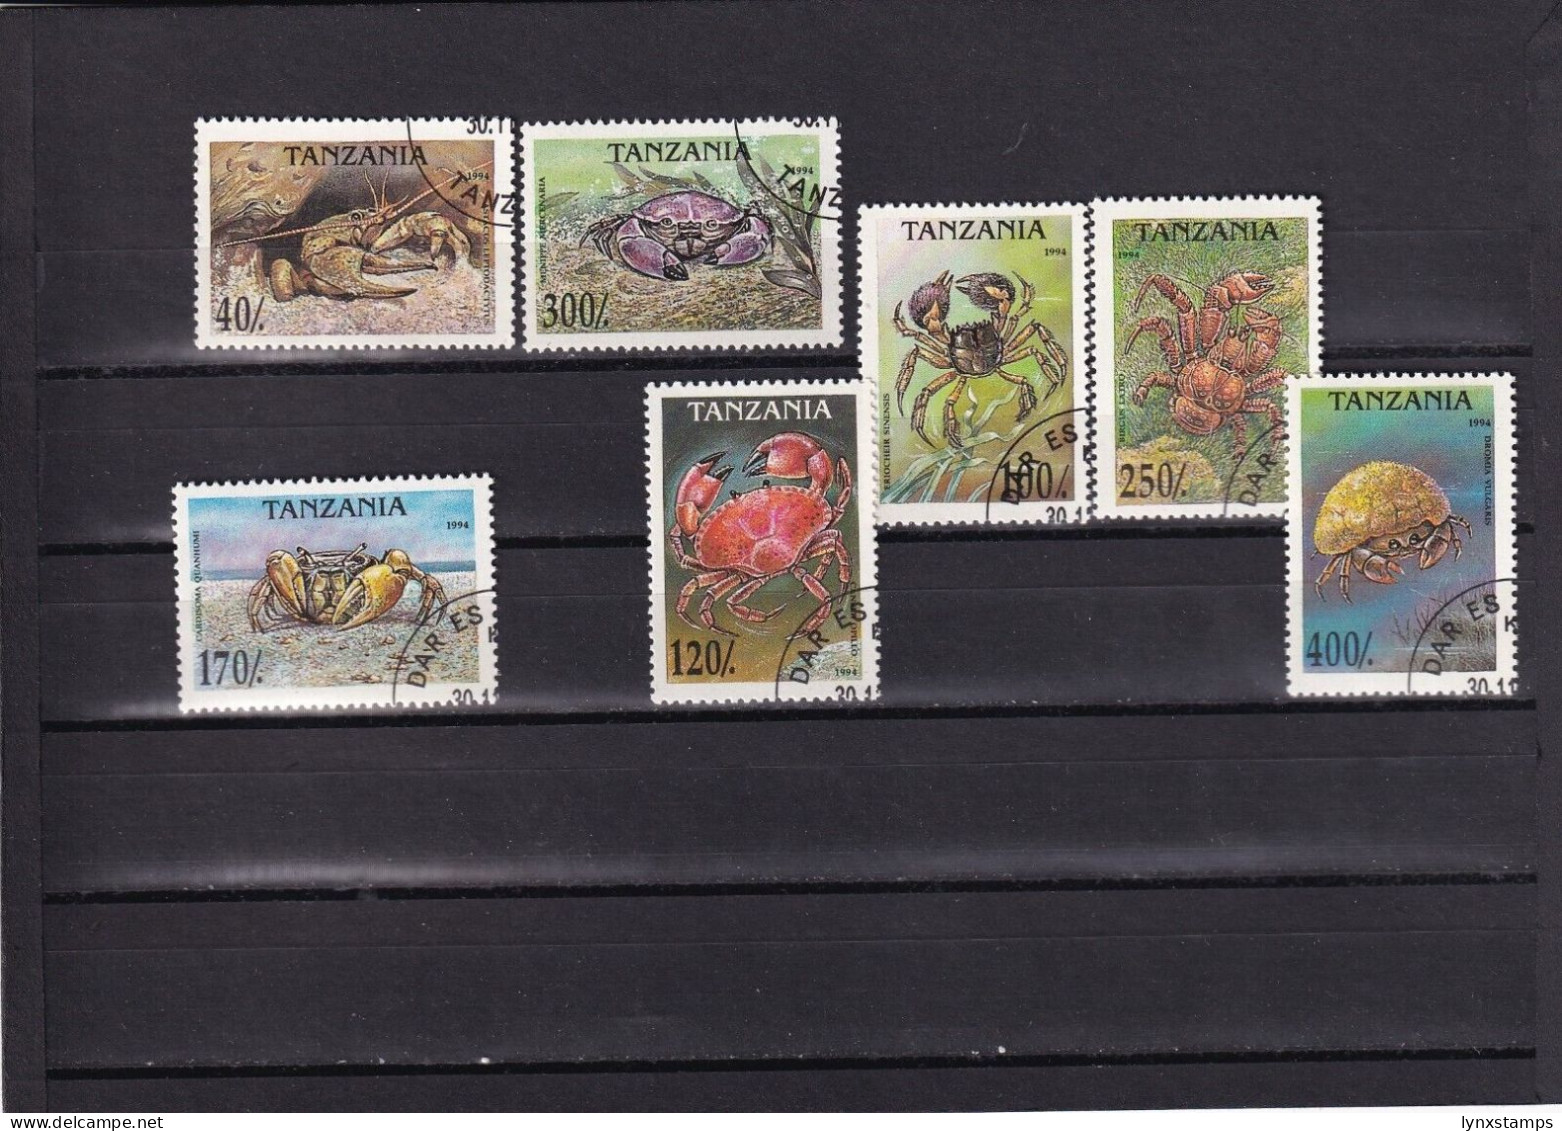 SA02 Tanzania 1994 Crustaceans Used Stamps - Tanzania (1964-...)